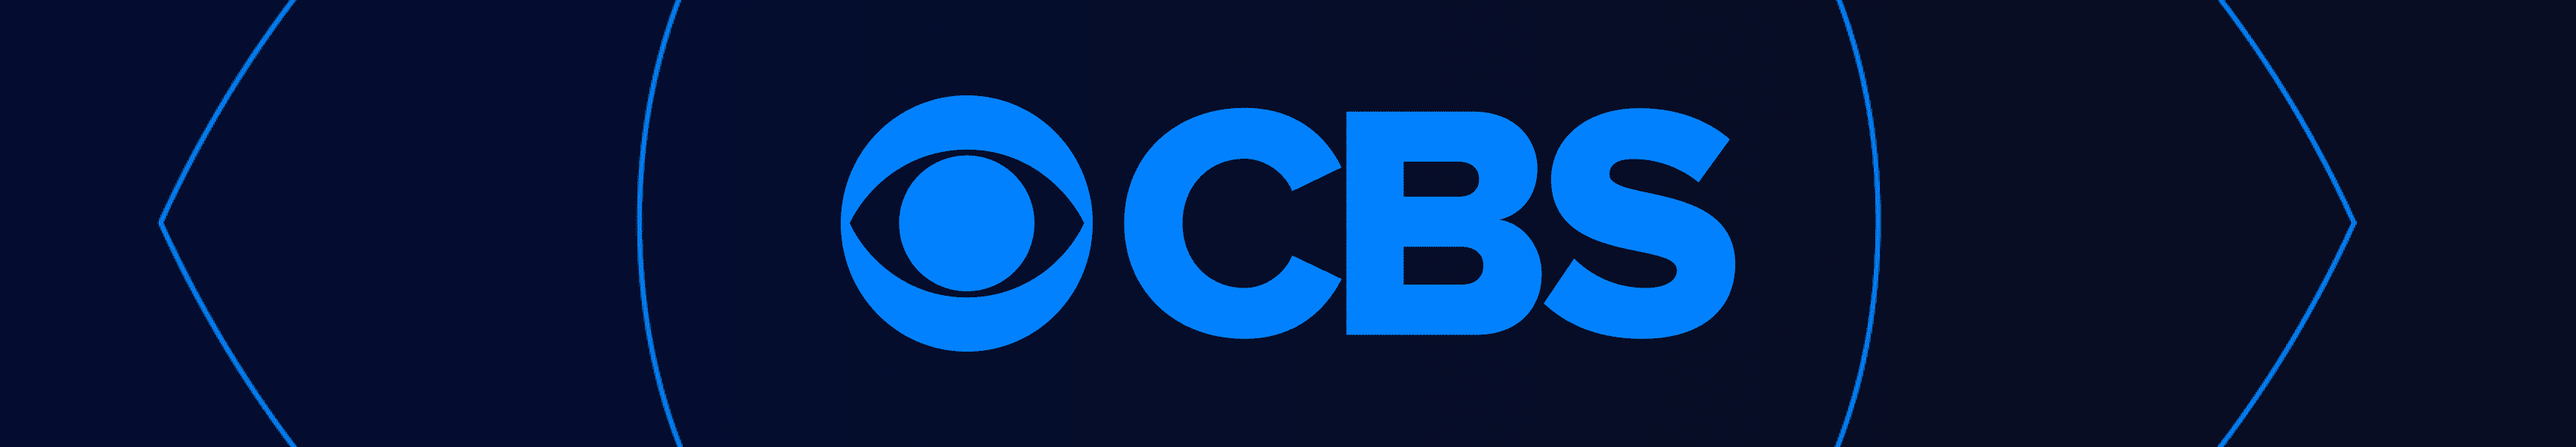 CBS Entertainment Camisetas sin mangas